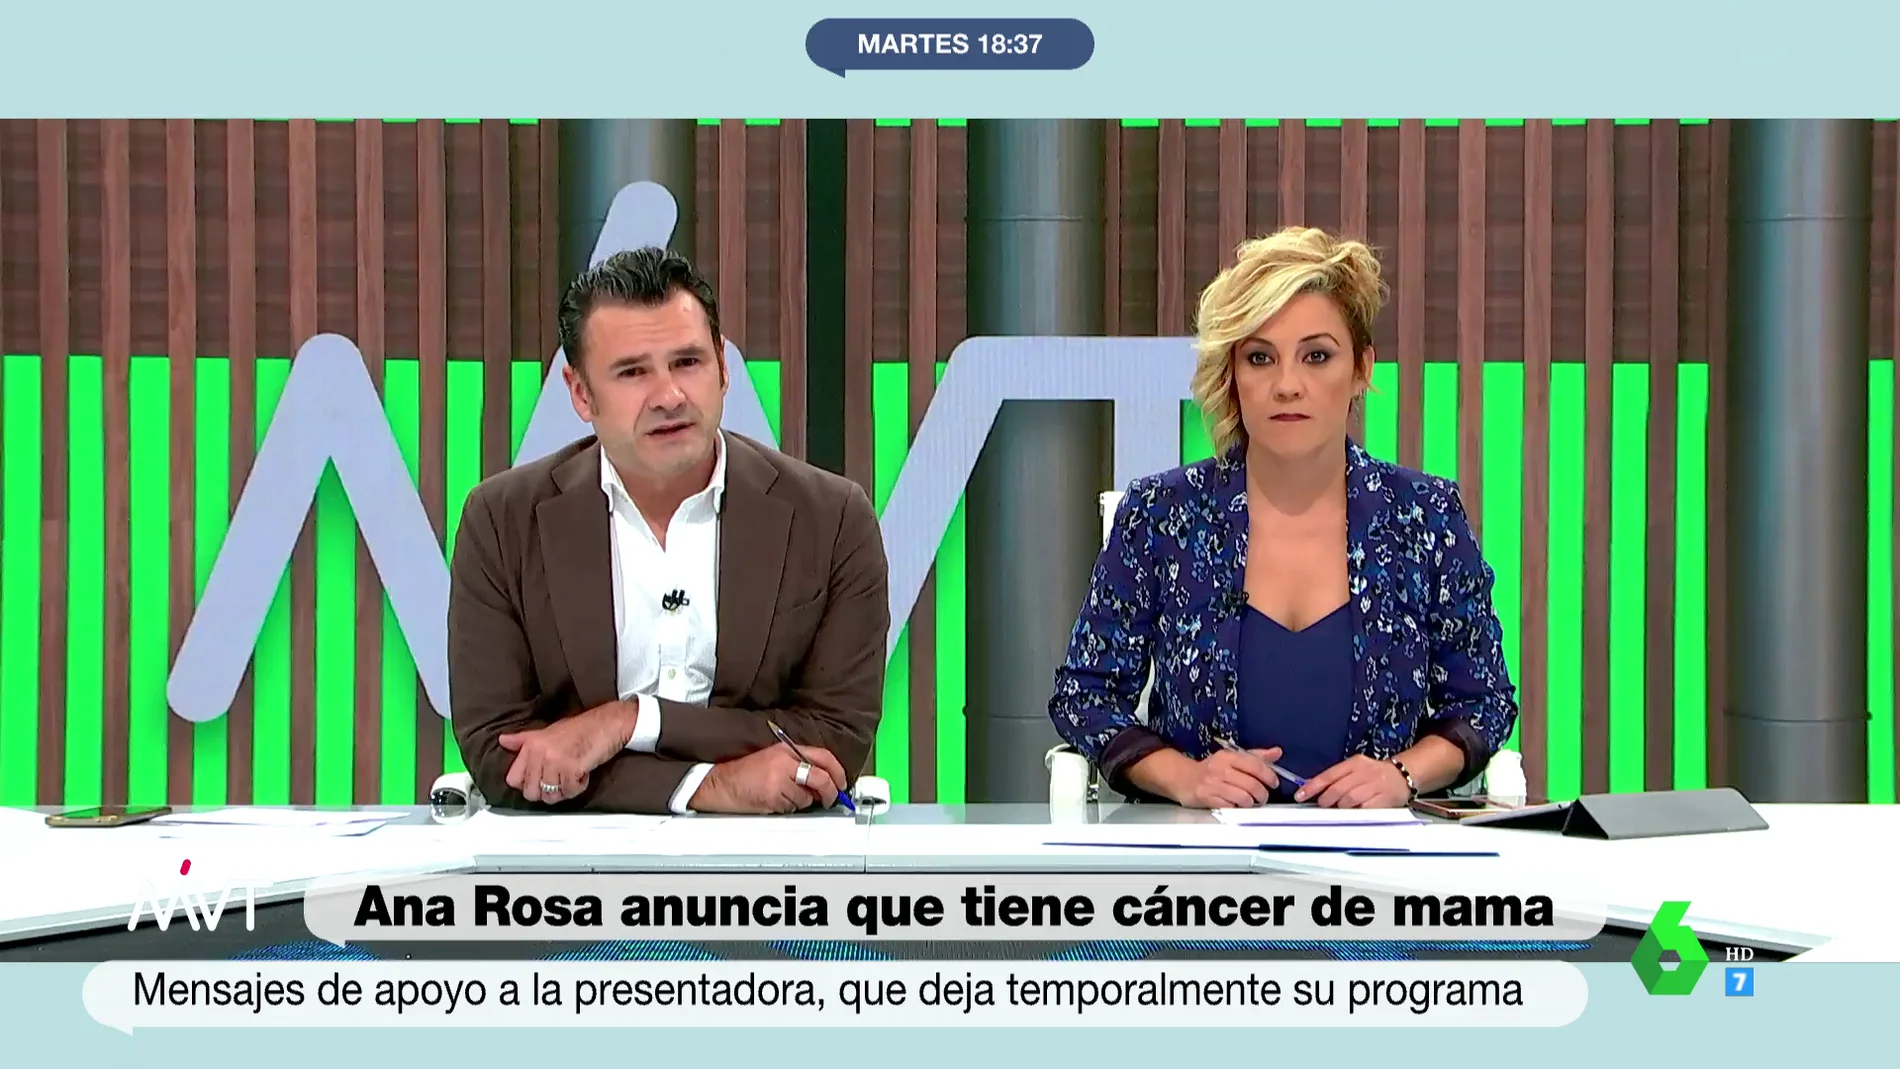 El mensaje de ánimo de Iñaki López a Ana Rosa Quintana tras anunciar que padece cáncer de mama